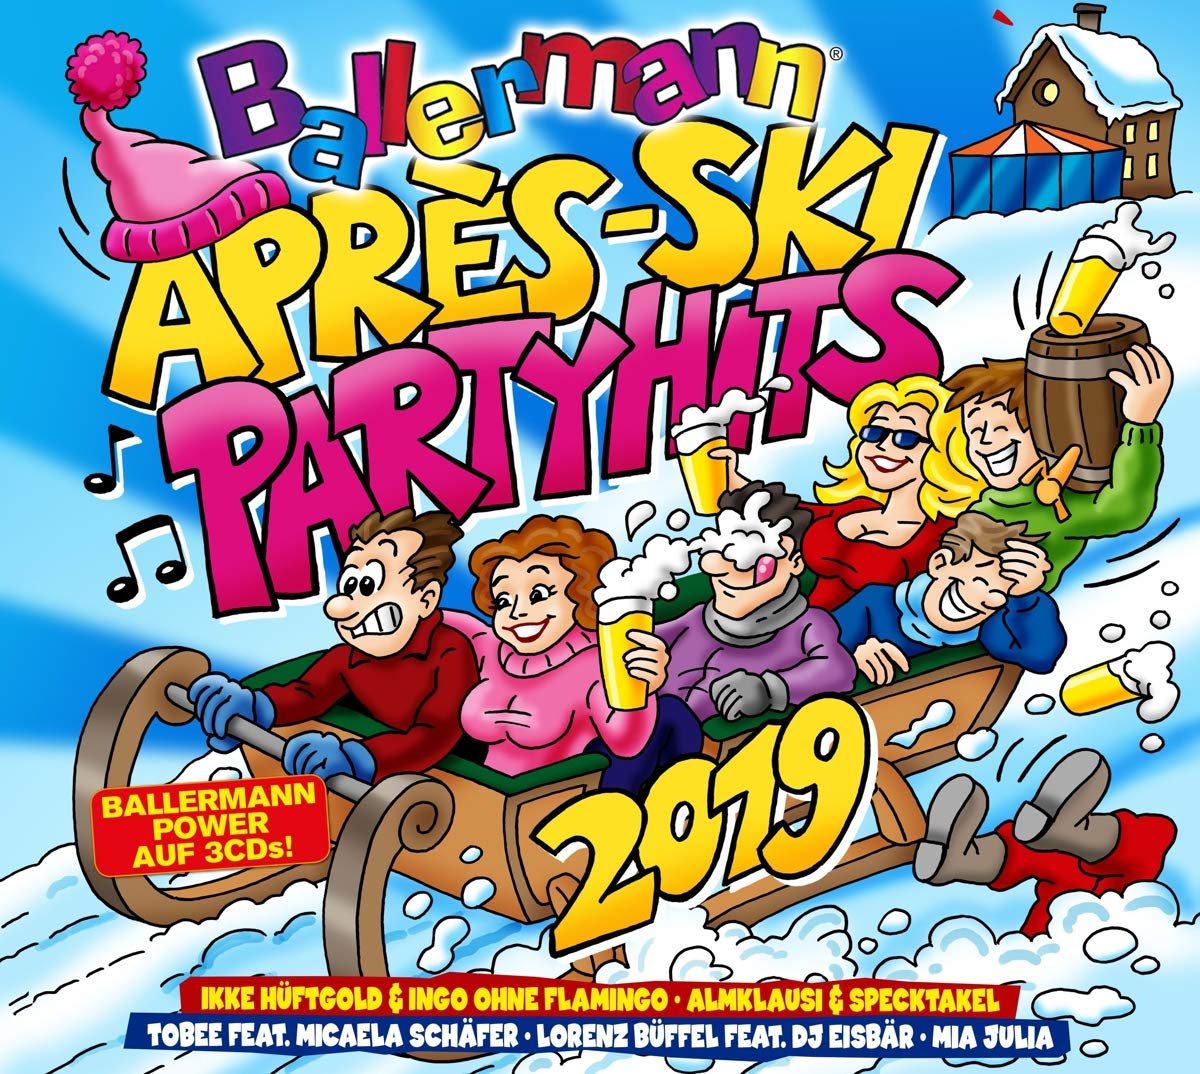 Ballermann Apres Ski Party Hits 2019